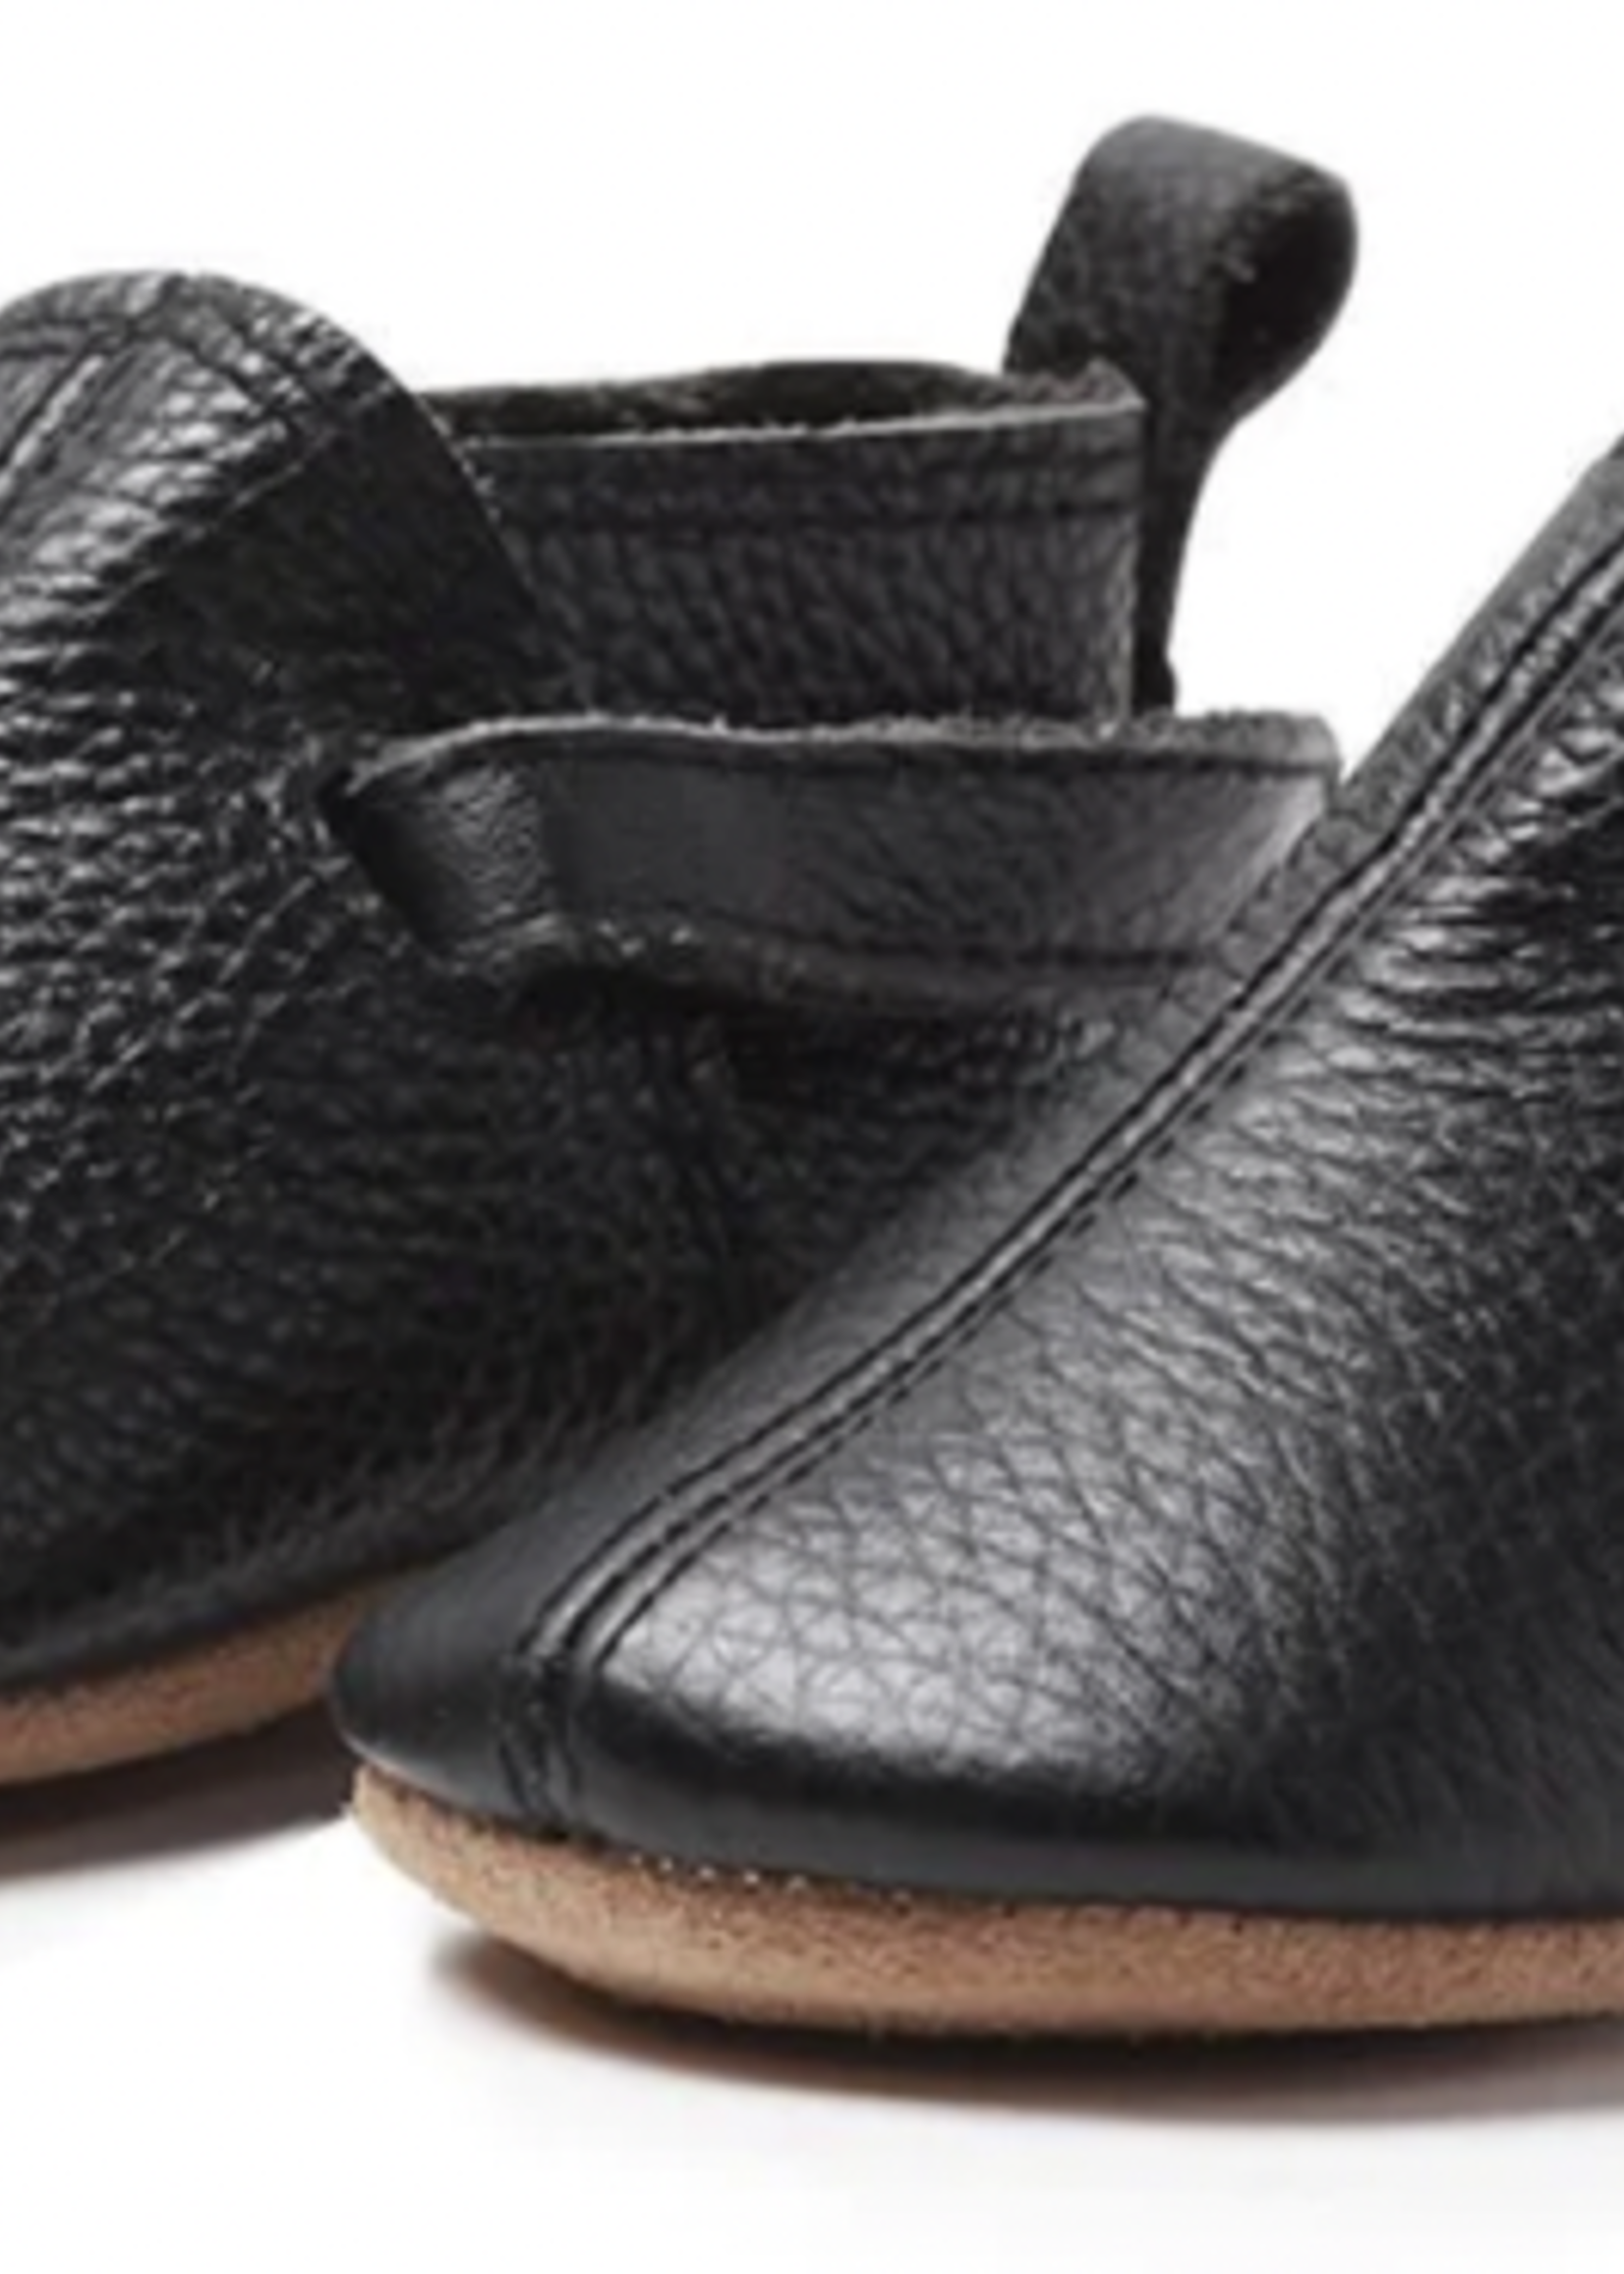 Zutanos Black Leather Baby Shoe